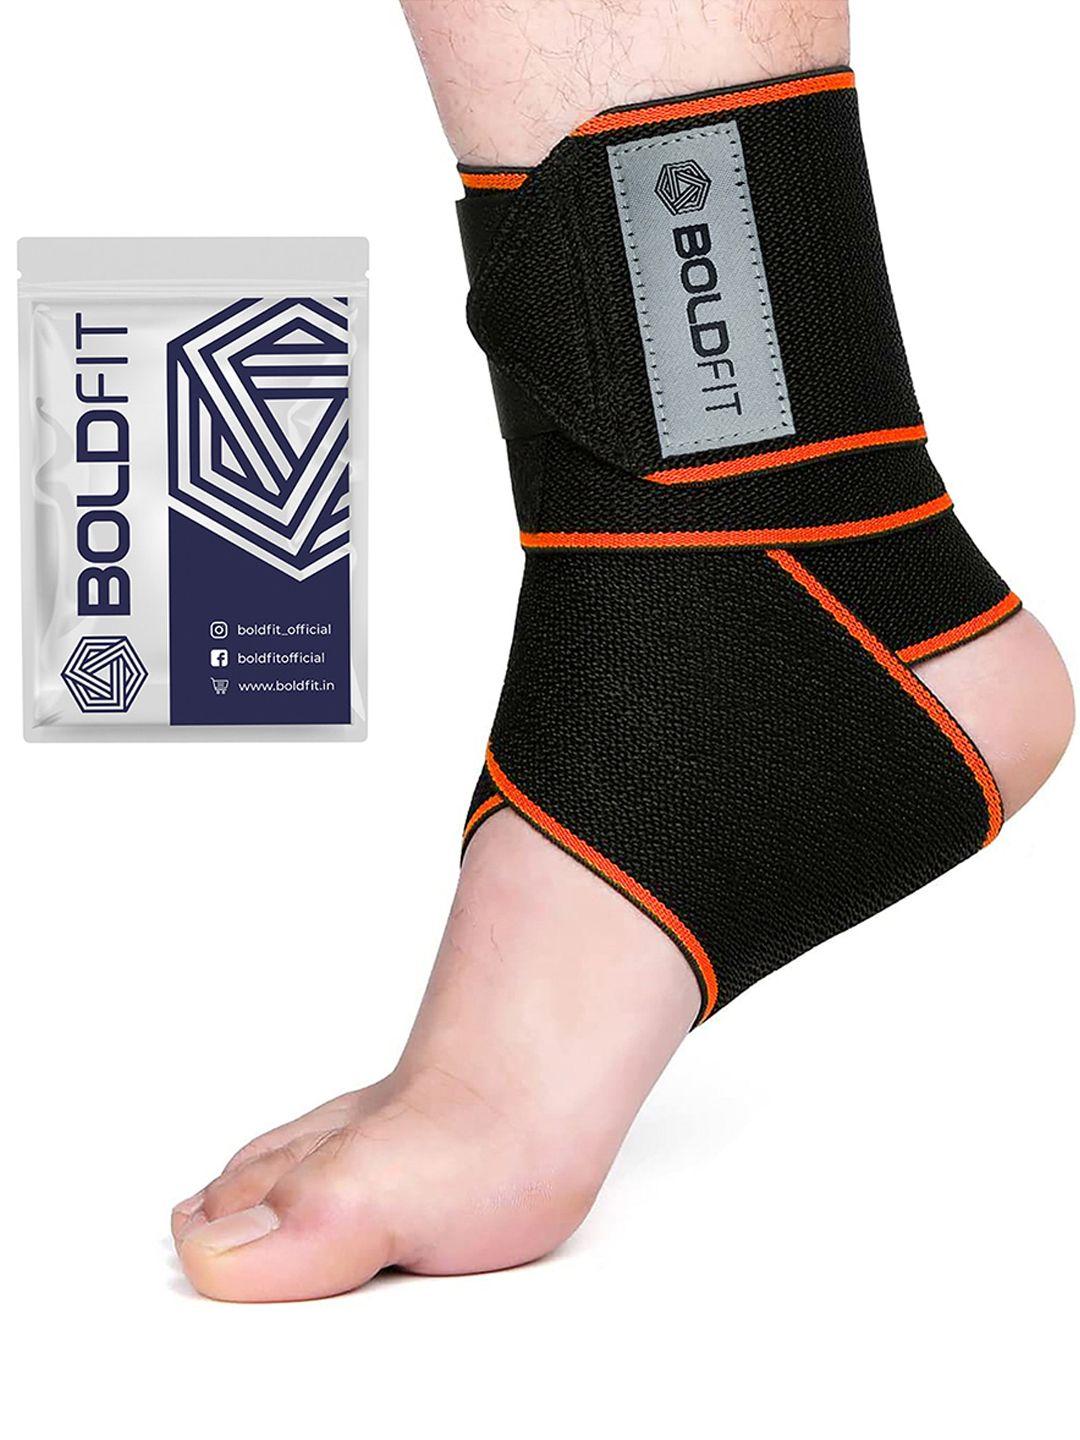 boldfit black ankle support wrap